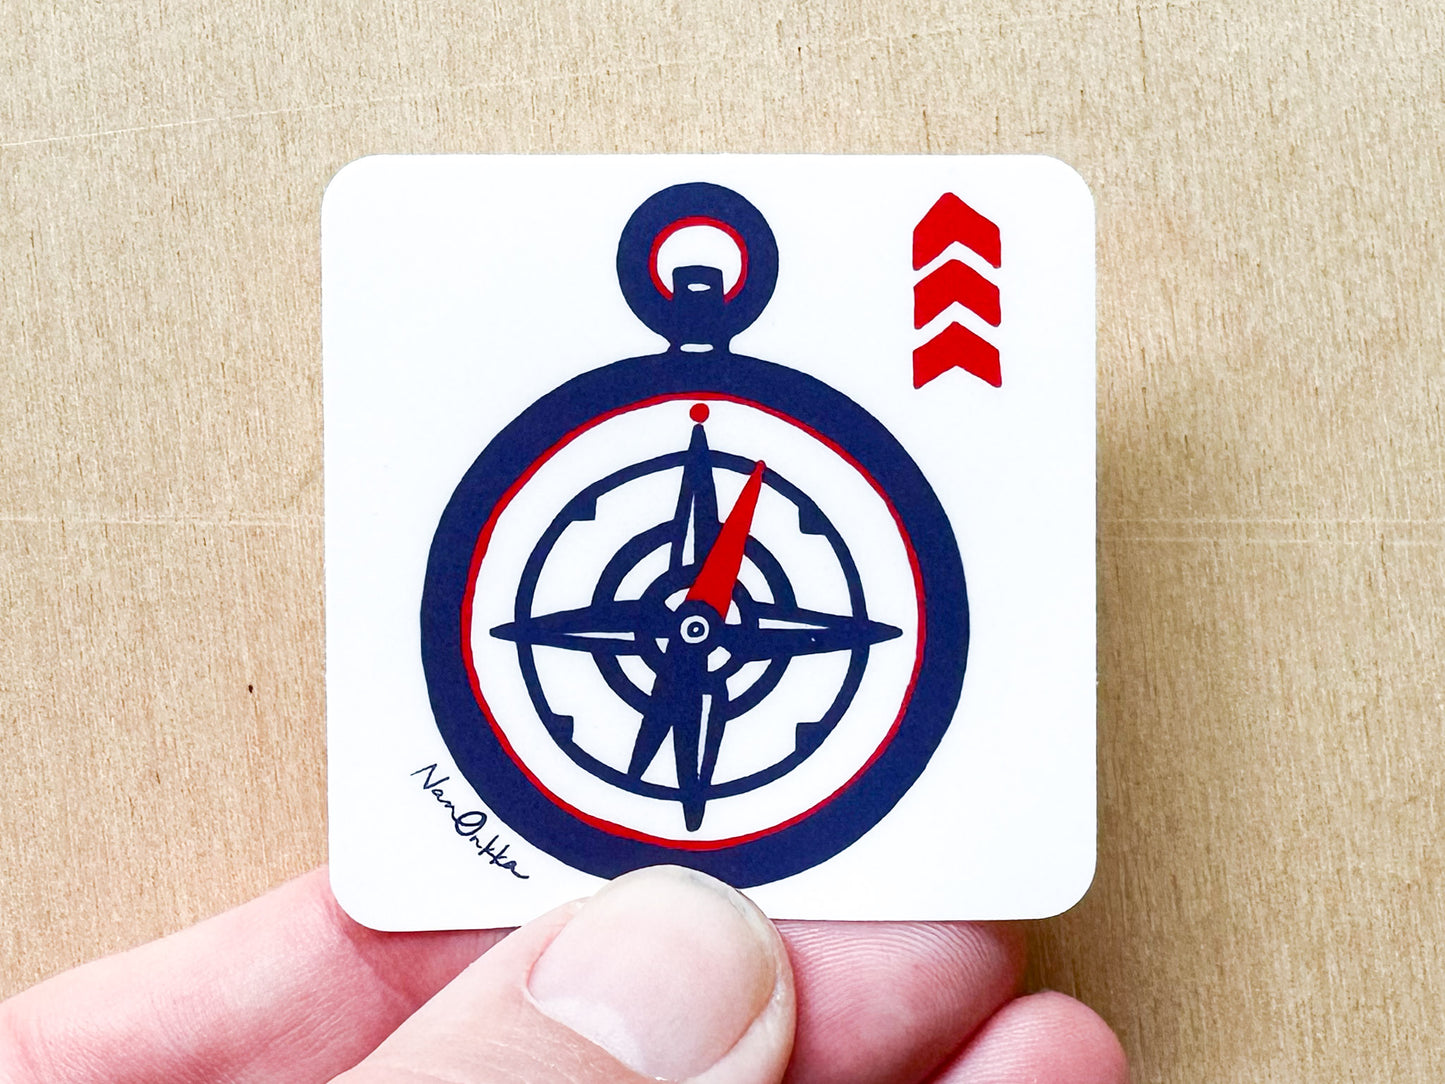 Compass Sticker